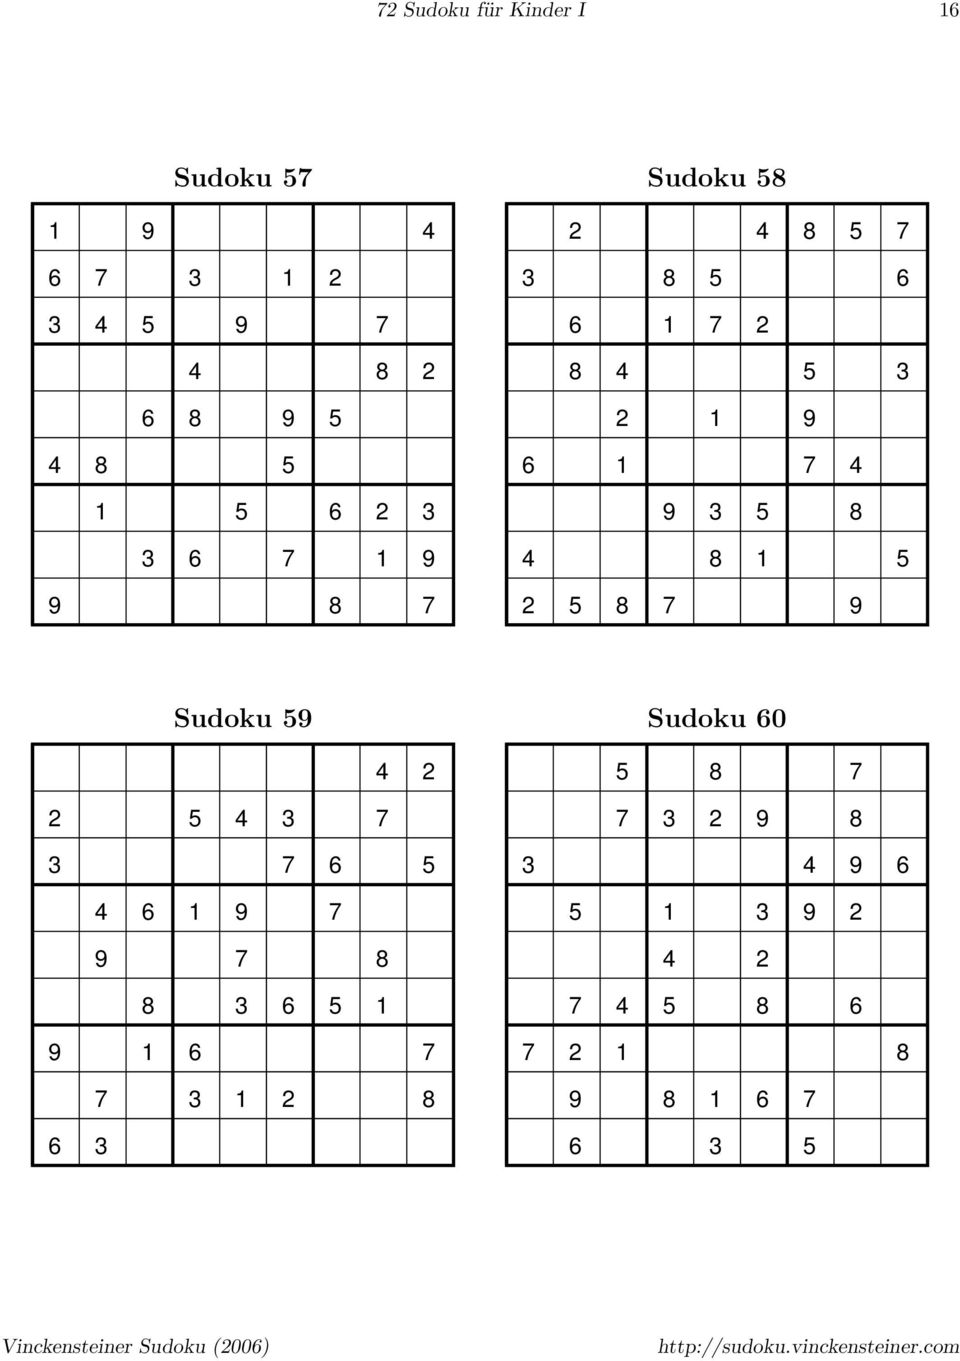 8 5 5 8 7 9 Sudoku 59 5 3 7 3 7 6 5 6 9 7 9 7 8 8 3 6 5 9 6 7 7 3